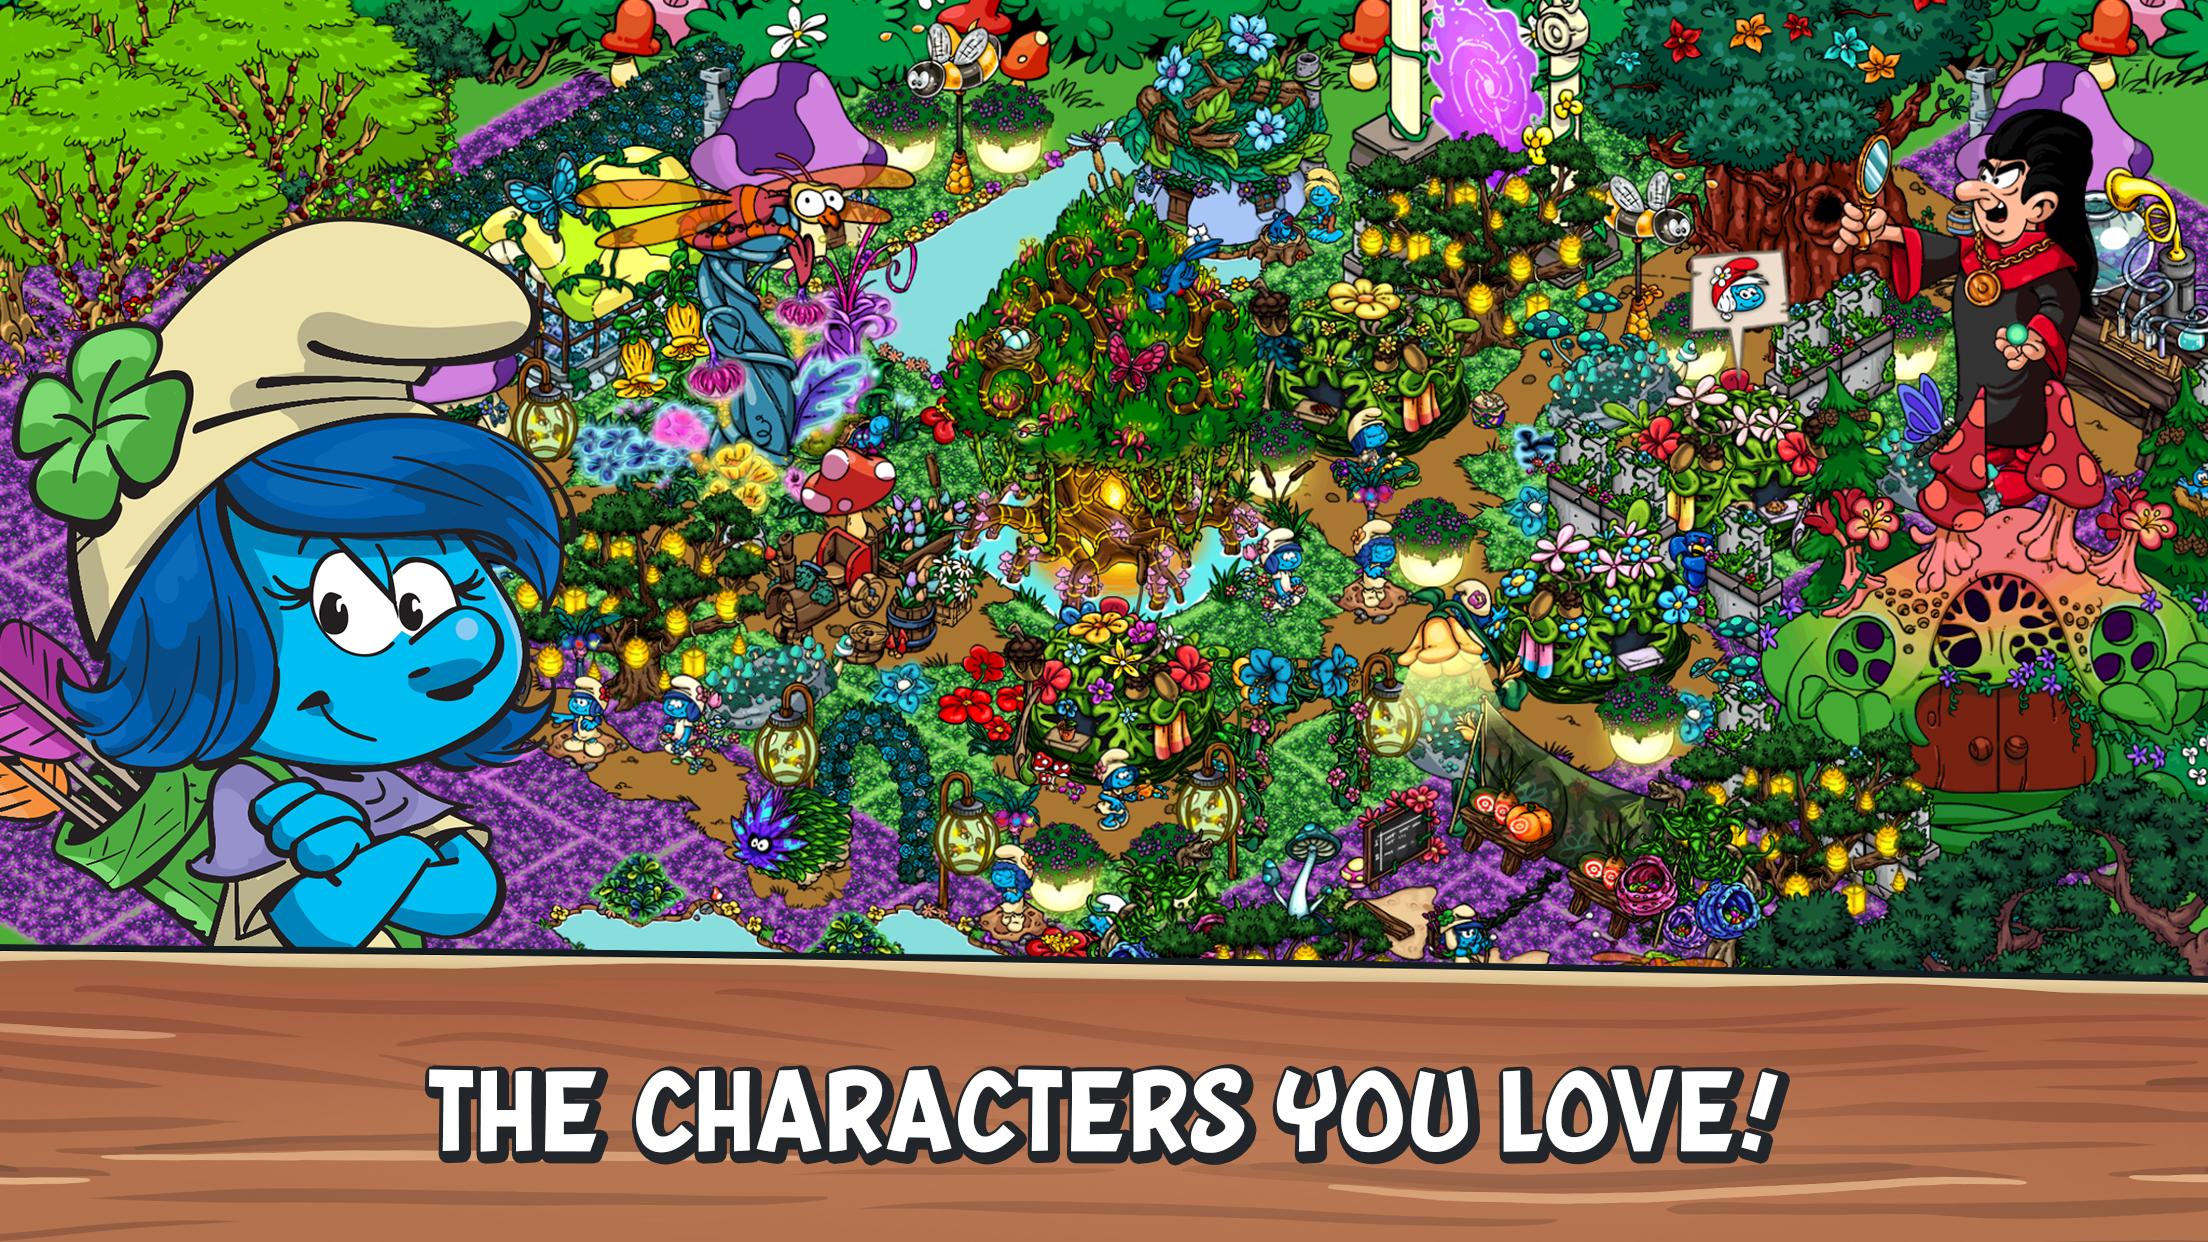 Smurfs' Village for Android - APK Download